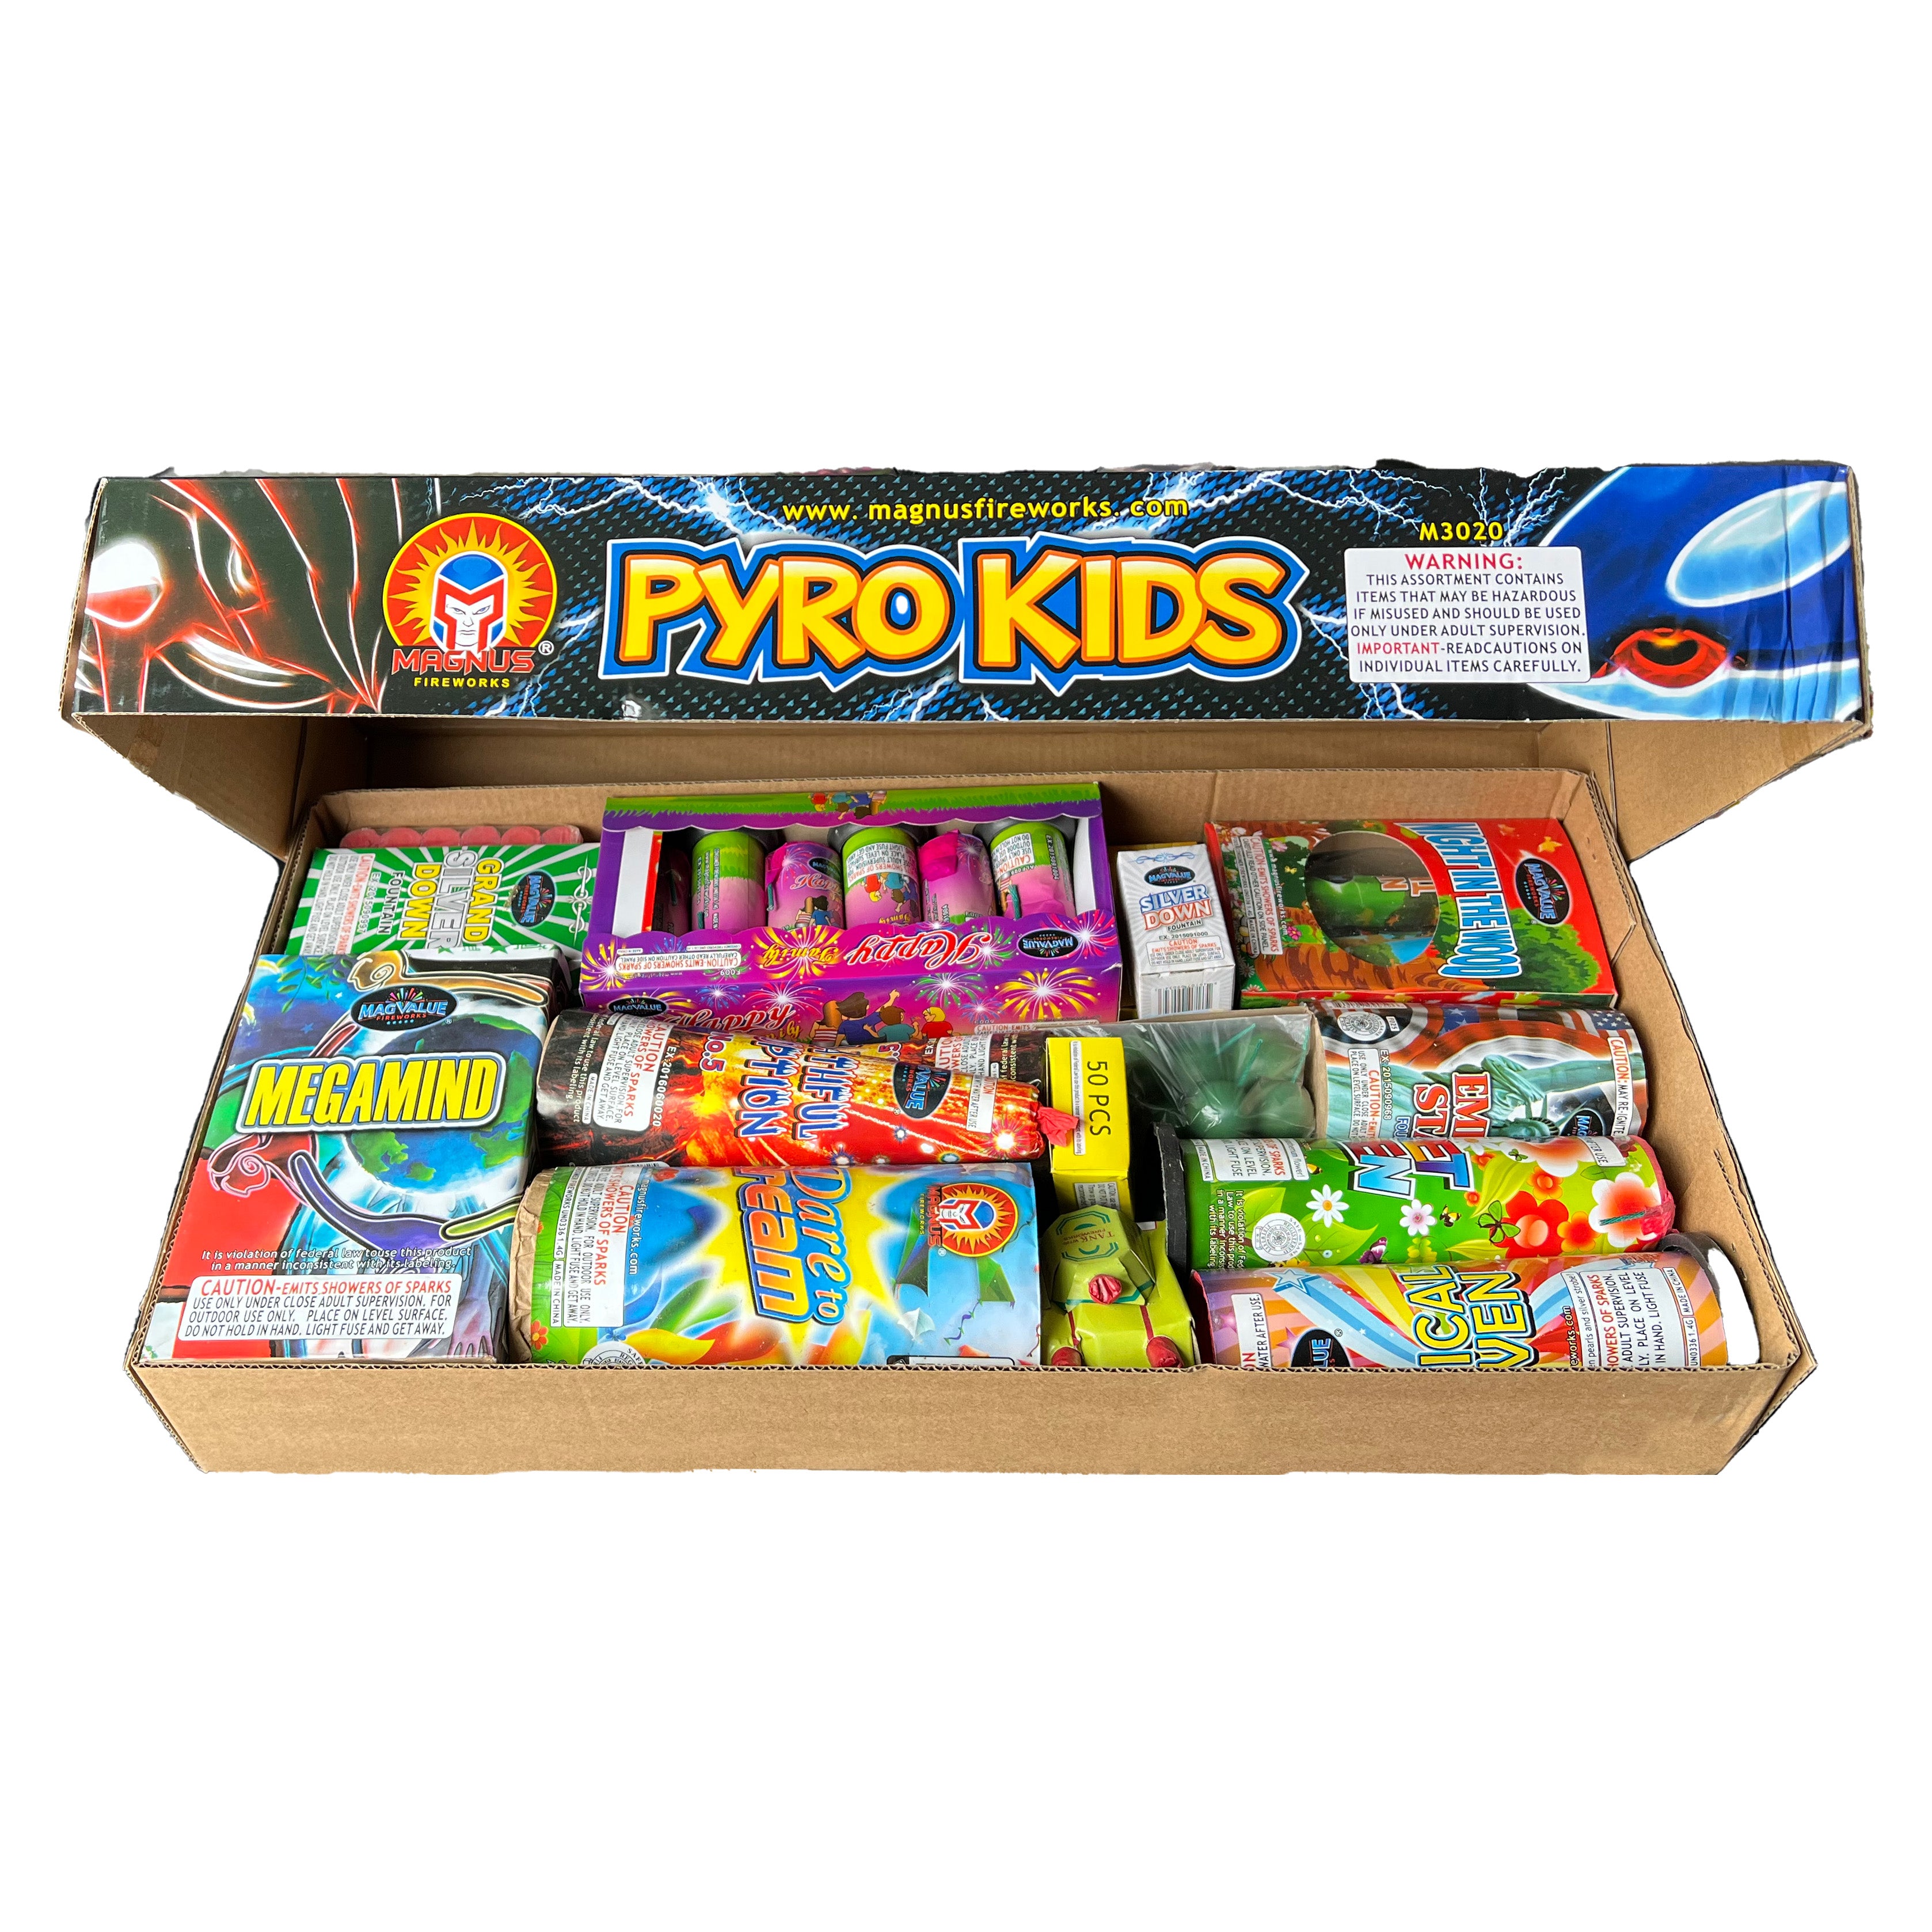 Pyro Kids Assorted Ground Firecrakers Box - 14 Varieties of Ground Assortments